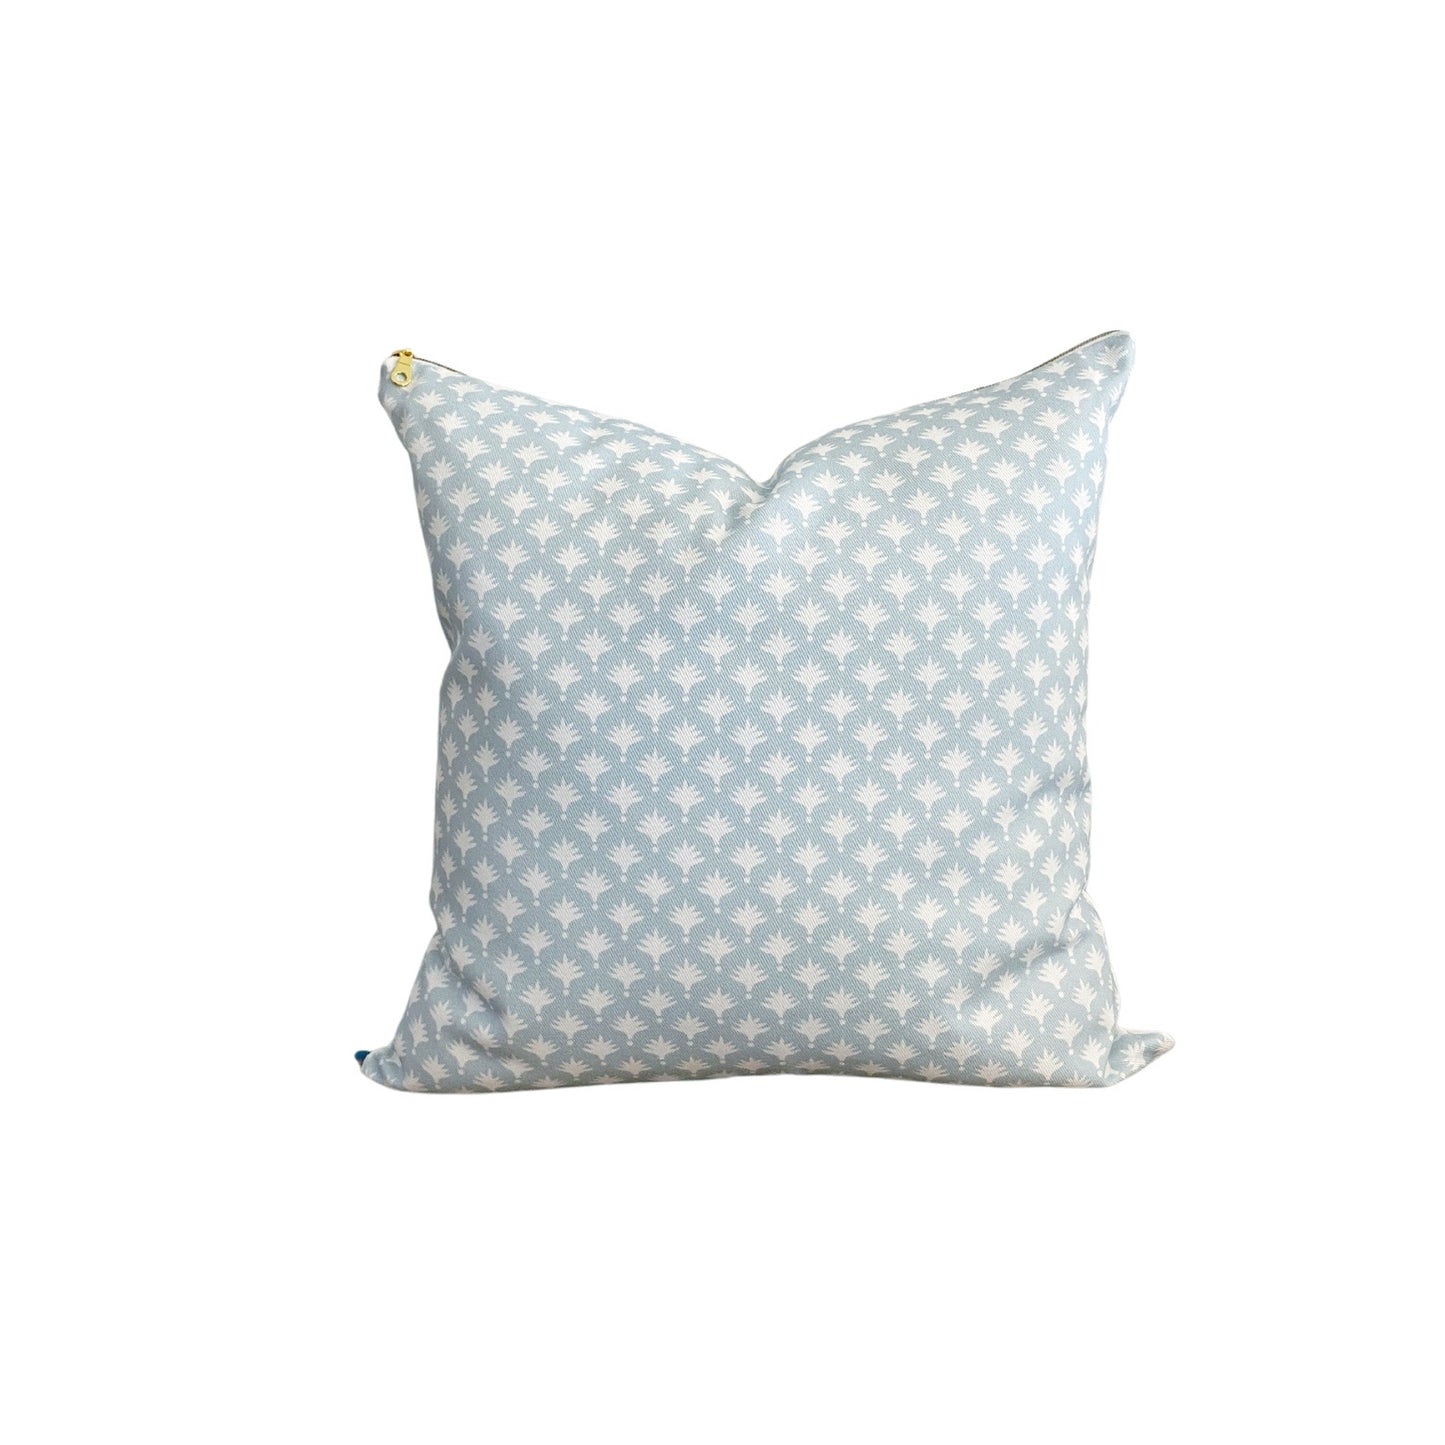 Tiny Palm White Pillow Cover - Designed by Danika Herrick